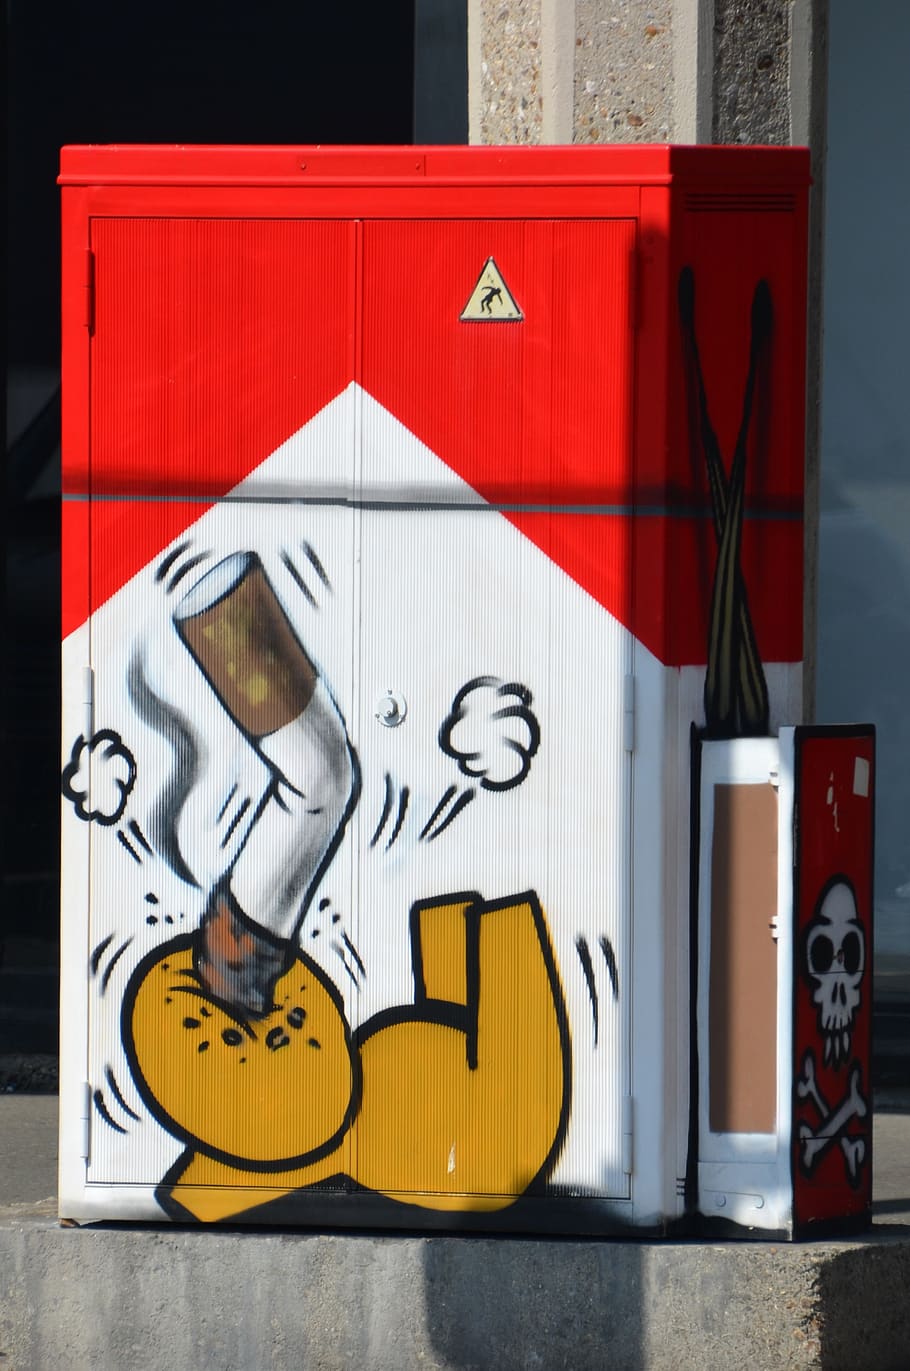 cigarettes, smoke, tobacco, unhealthy, addiction, smoking, nicotine, art and craft, creativity, representation